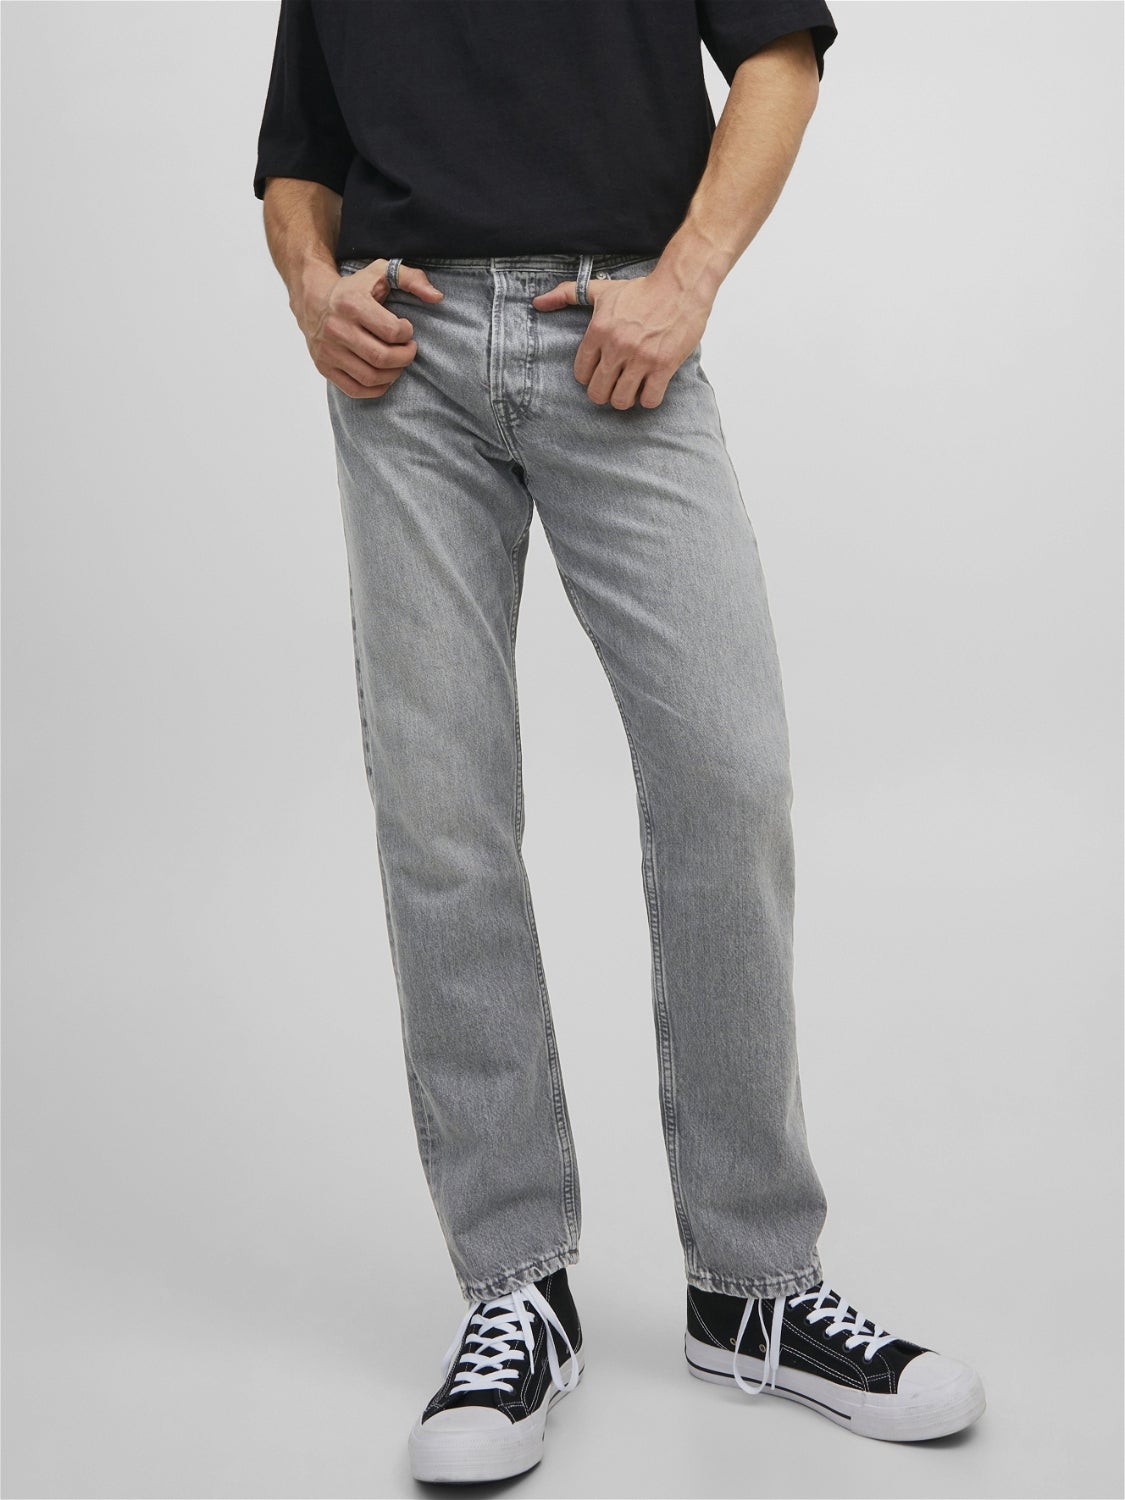 Regular Fit Faded Jack Jones Denim Jeans, Light Grey at Rs 1649/piece in  New Delhi